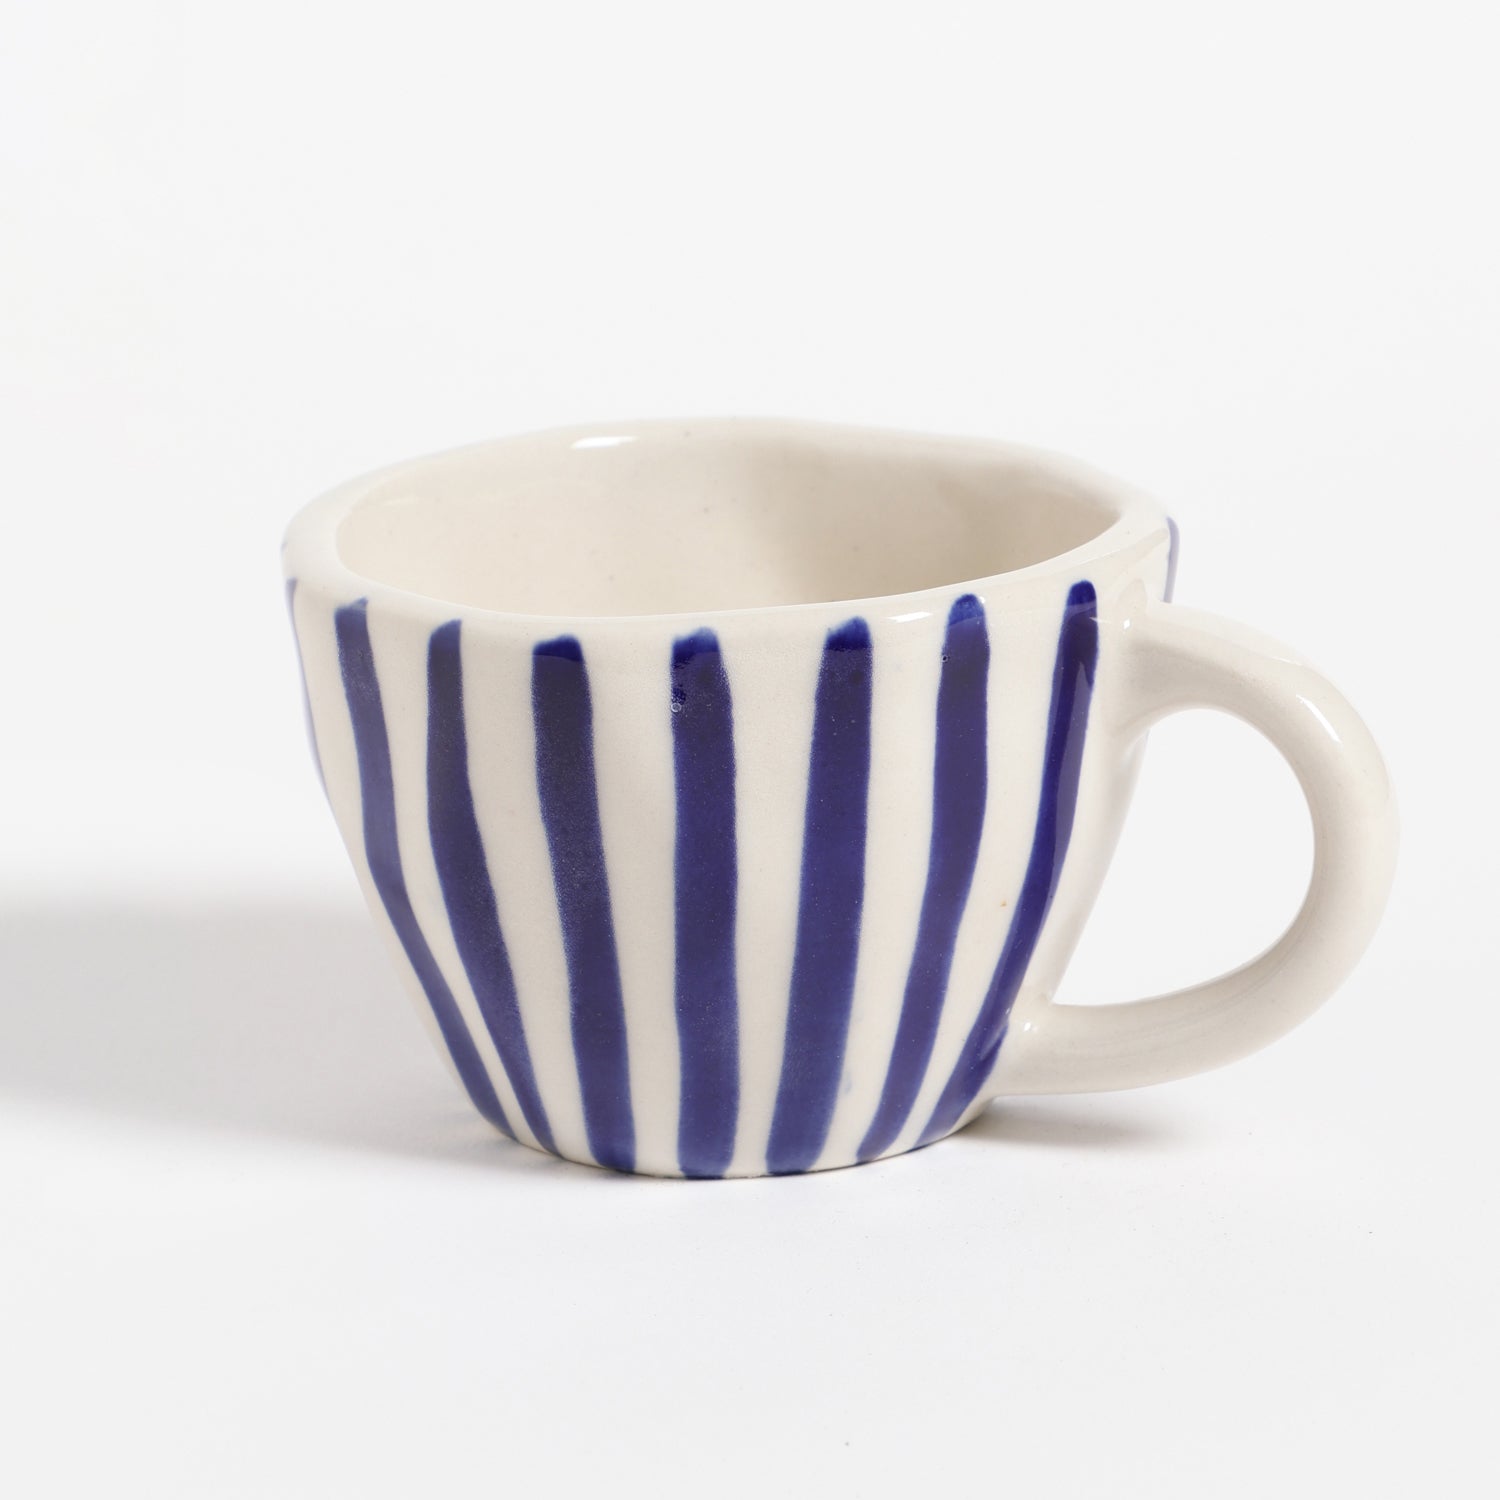 Ceramic Cups - Indigo Stripes - 3.5 x 2.5